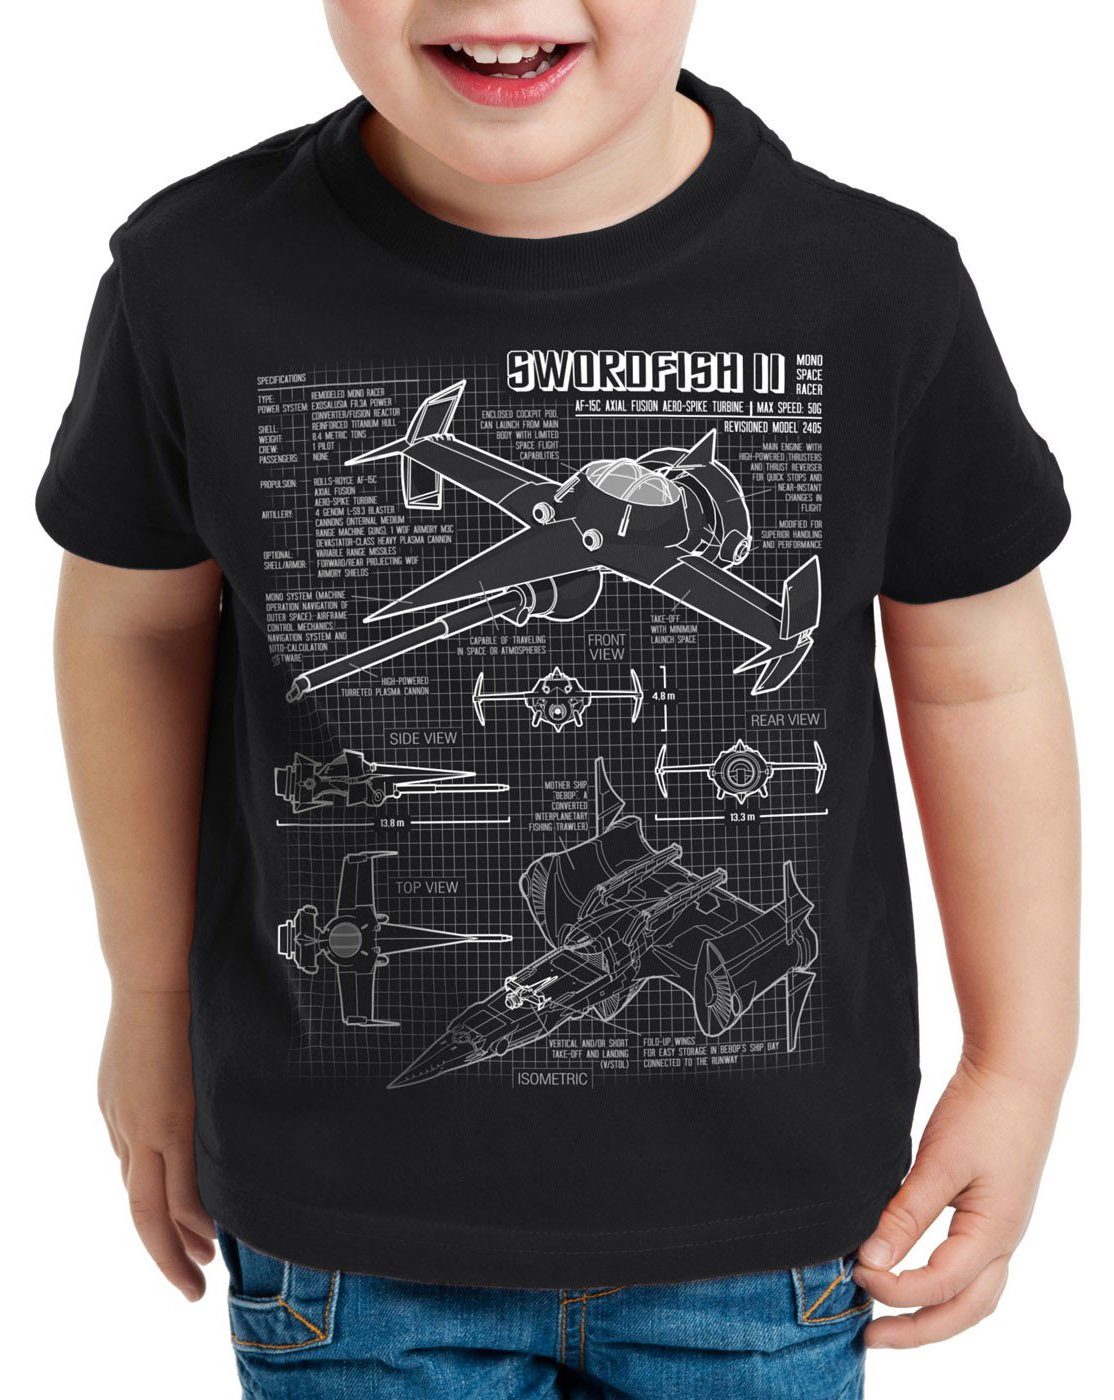 style3 Print-Shirt Kinder T-Shirt Bebop Swordfish II mono racer cowboy schwarz